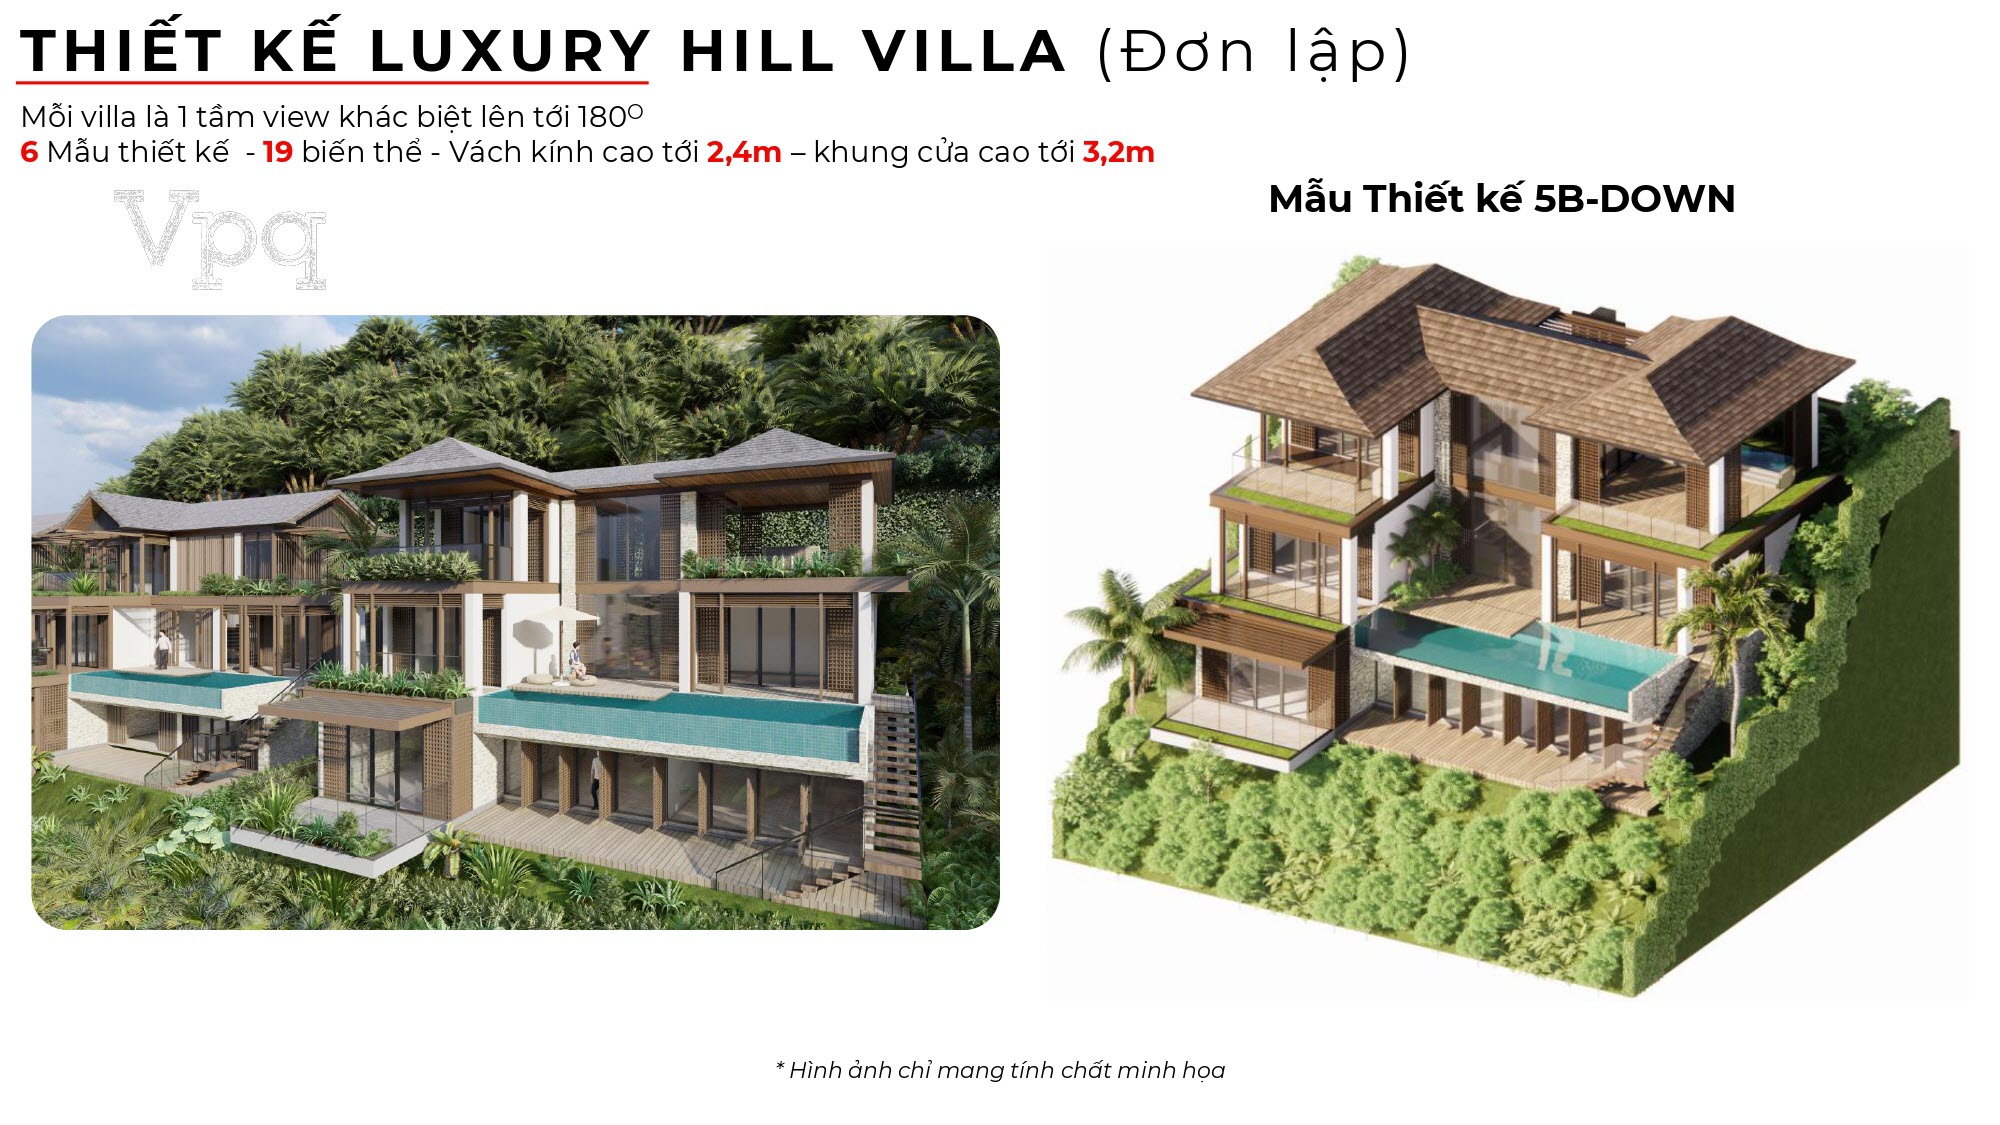 Mẫu thiết kế Luxury Hill Villa (Đơn lập): 5B - Down